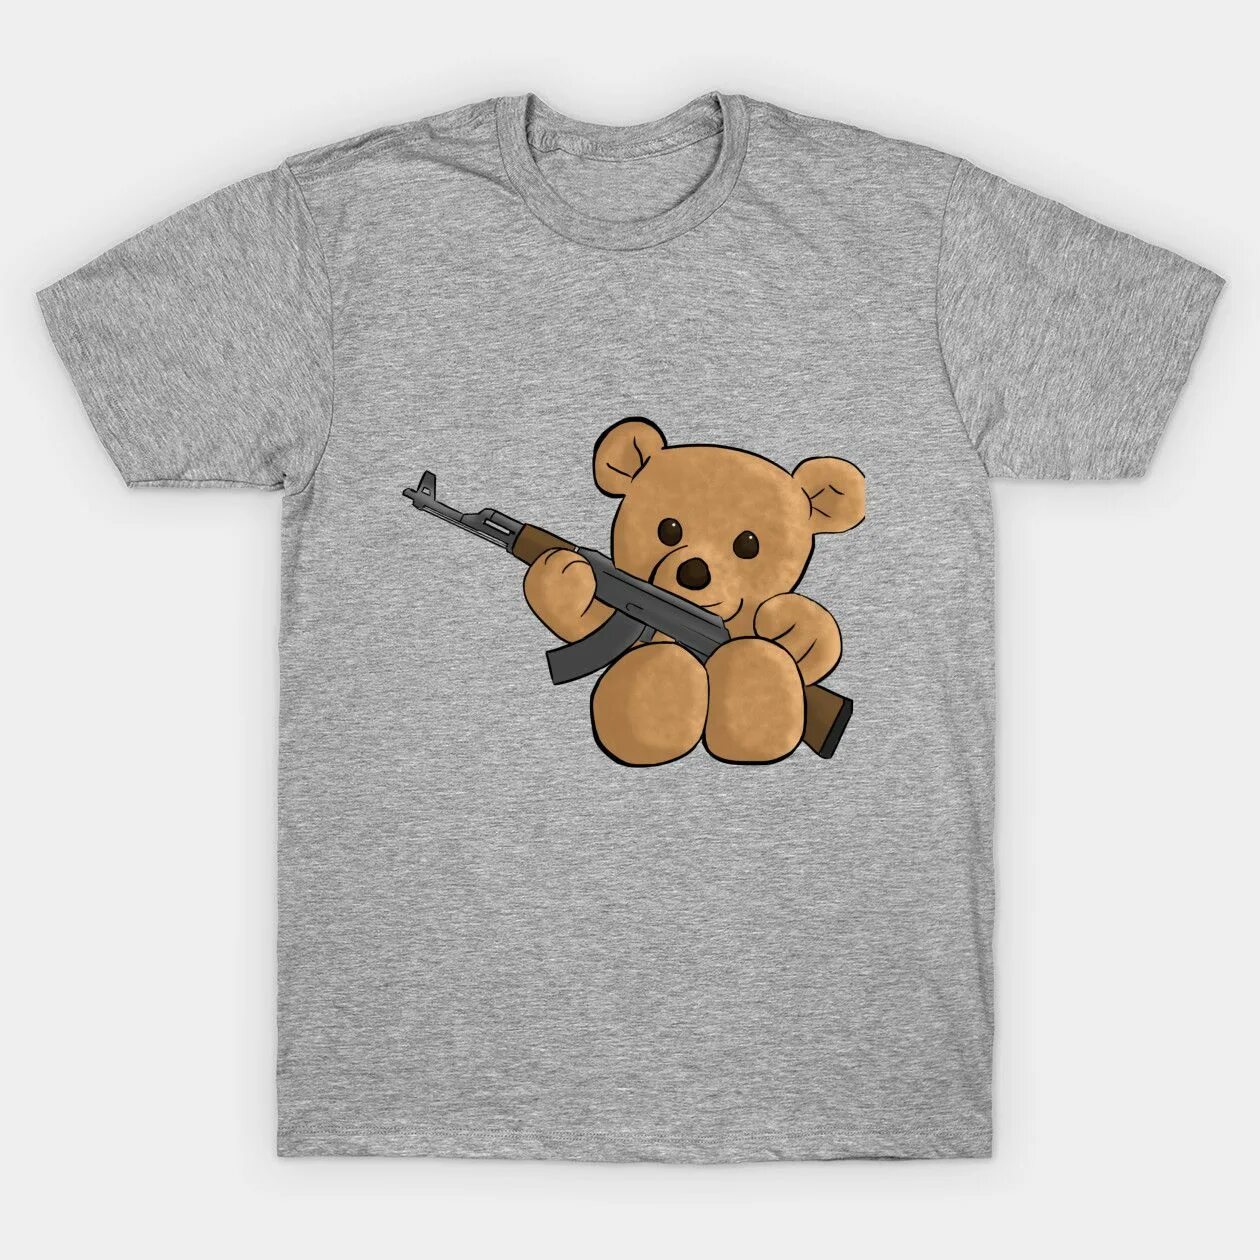 He can t bear. Teddy t Shirt. Футболка с Тедди. Teddy Bear t Shirt. Футболка с Теди для мальчиков.